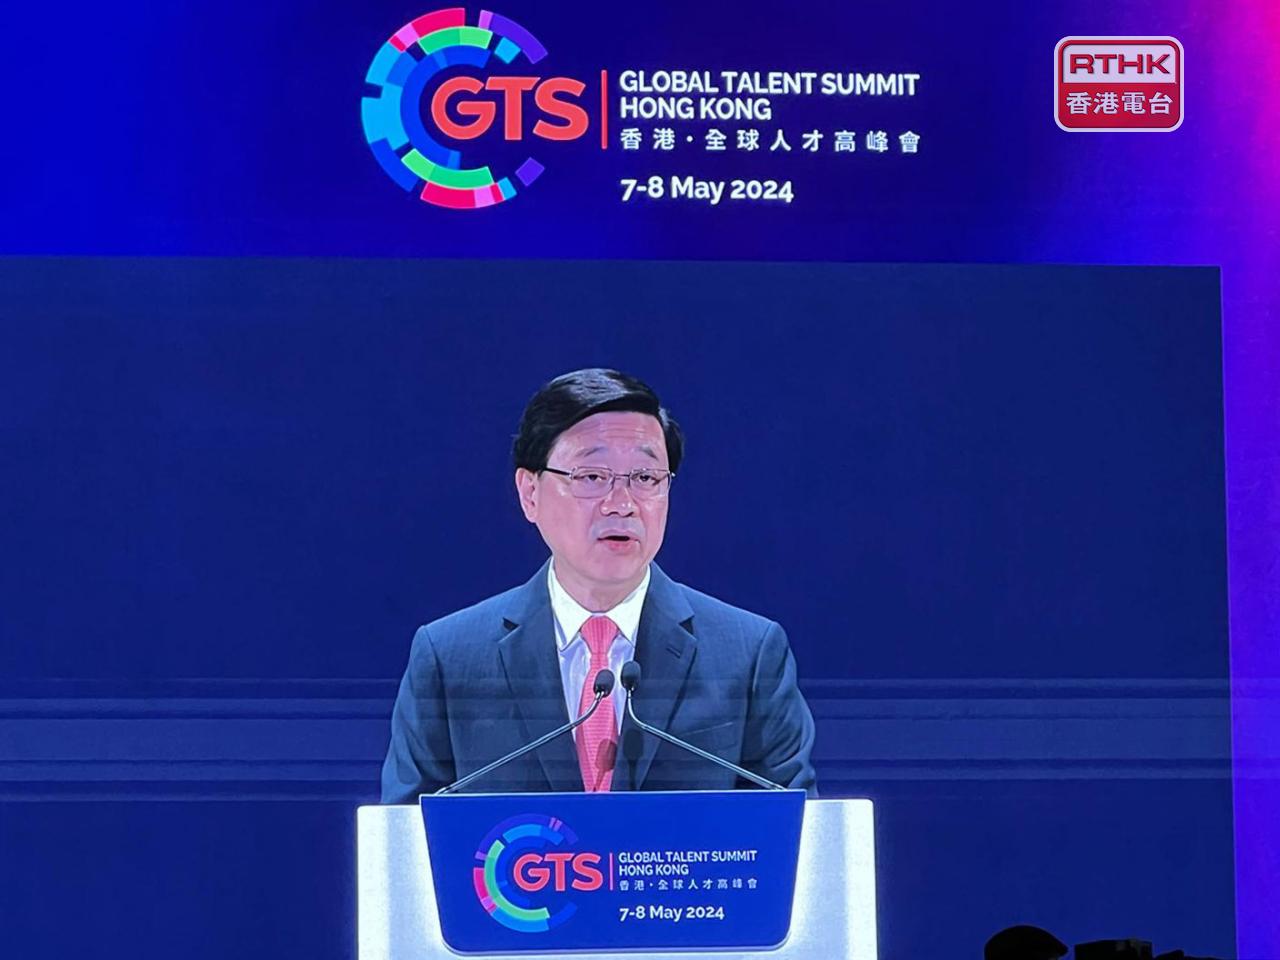 HK has unique advantages to attract global talent: CE